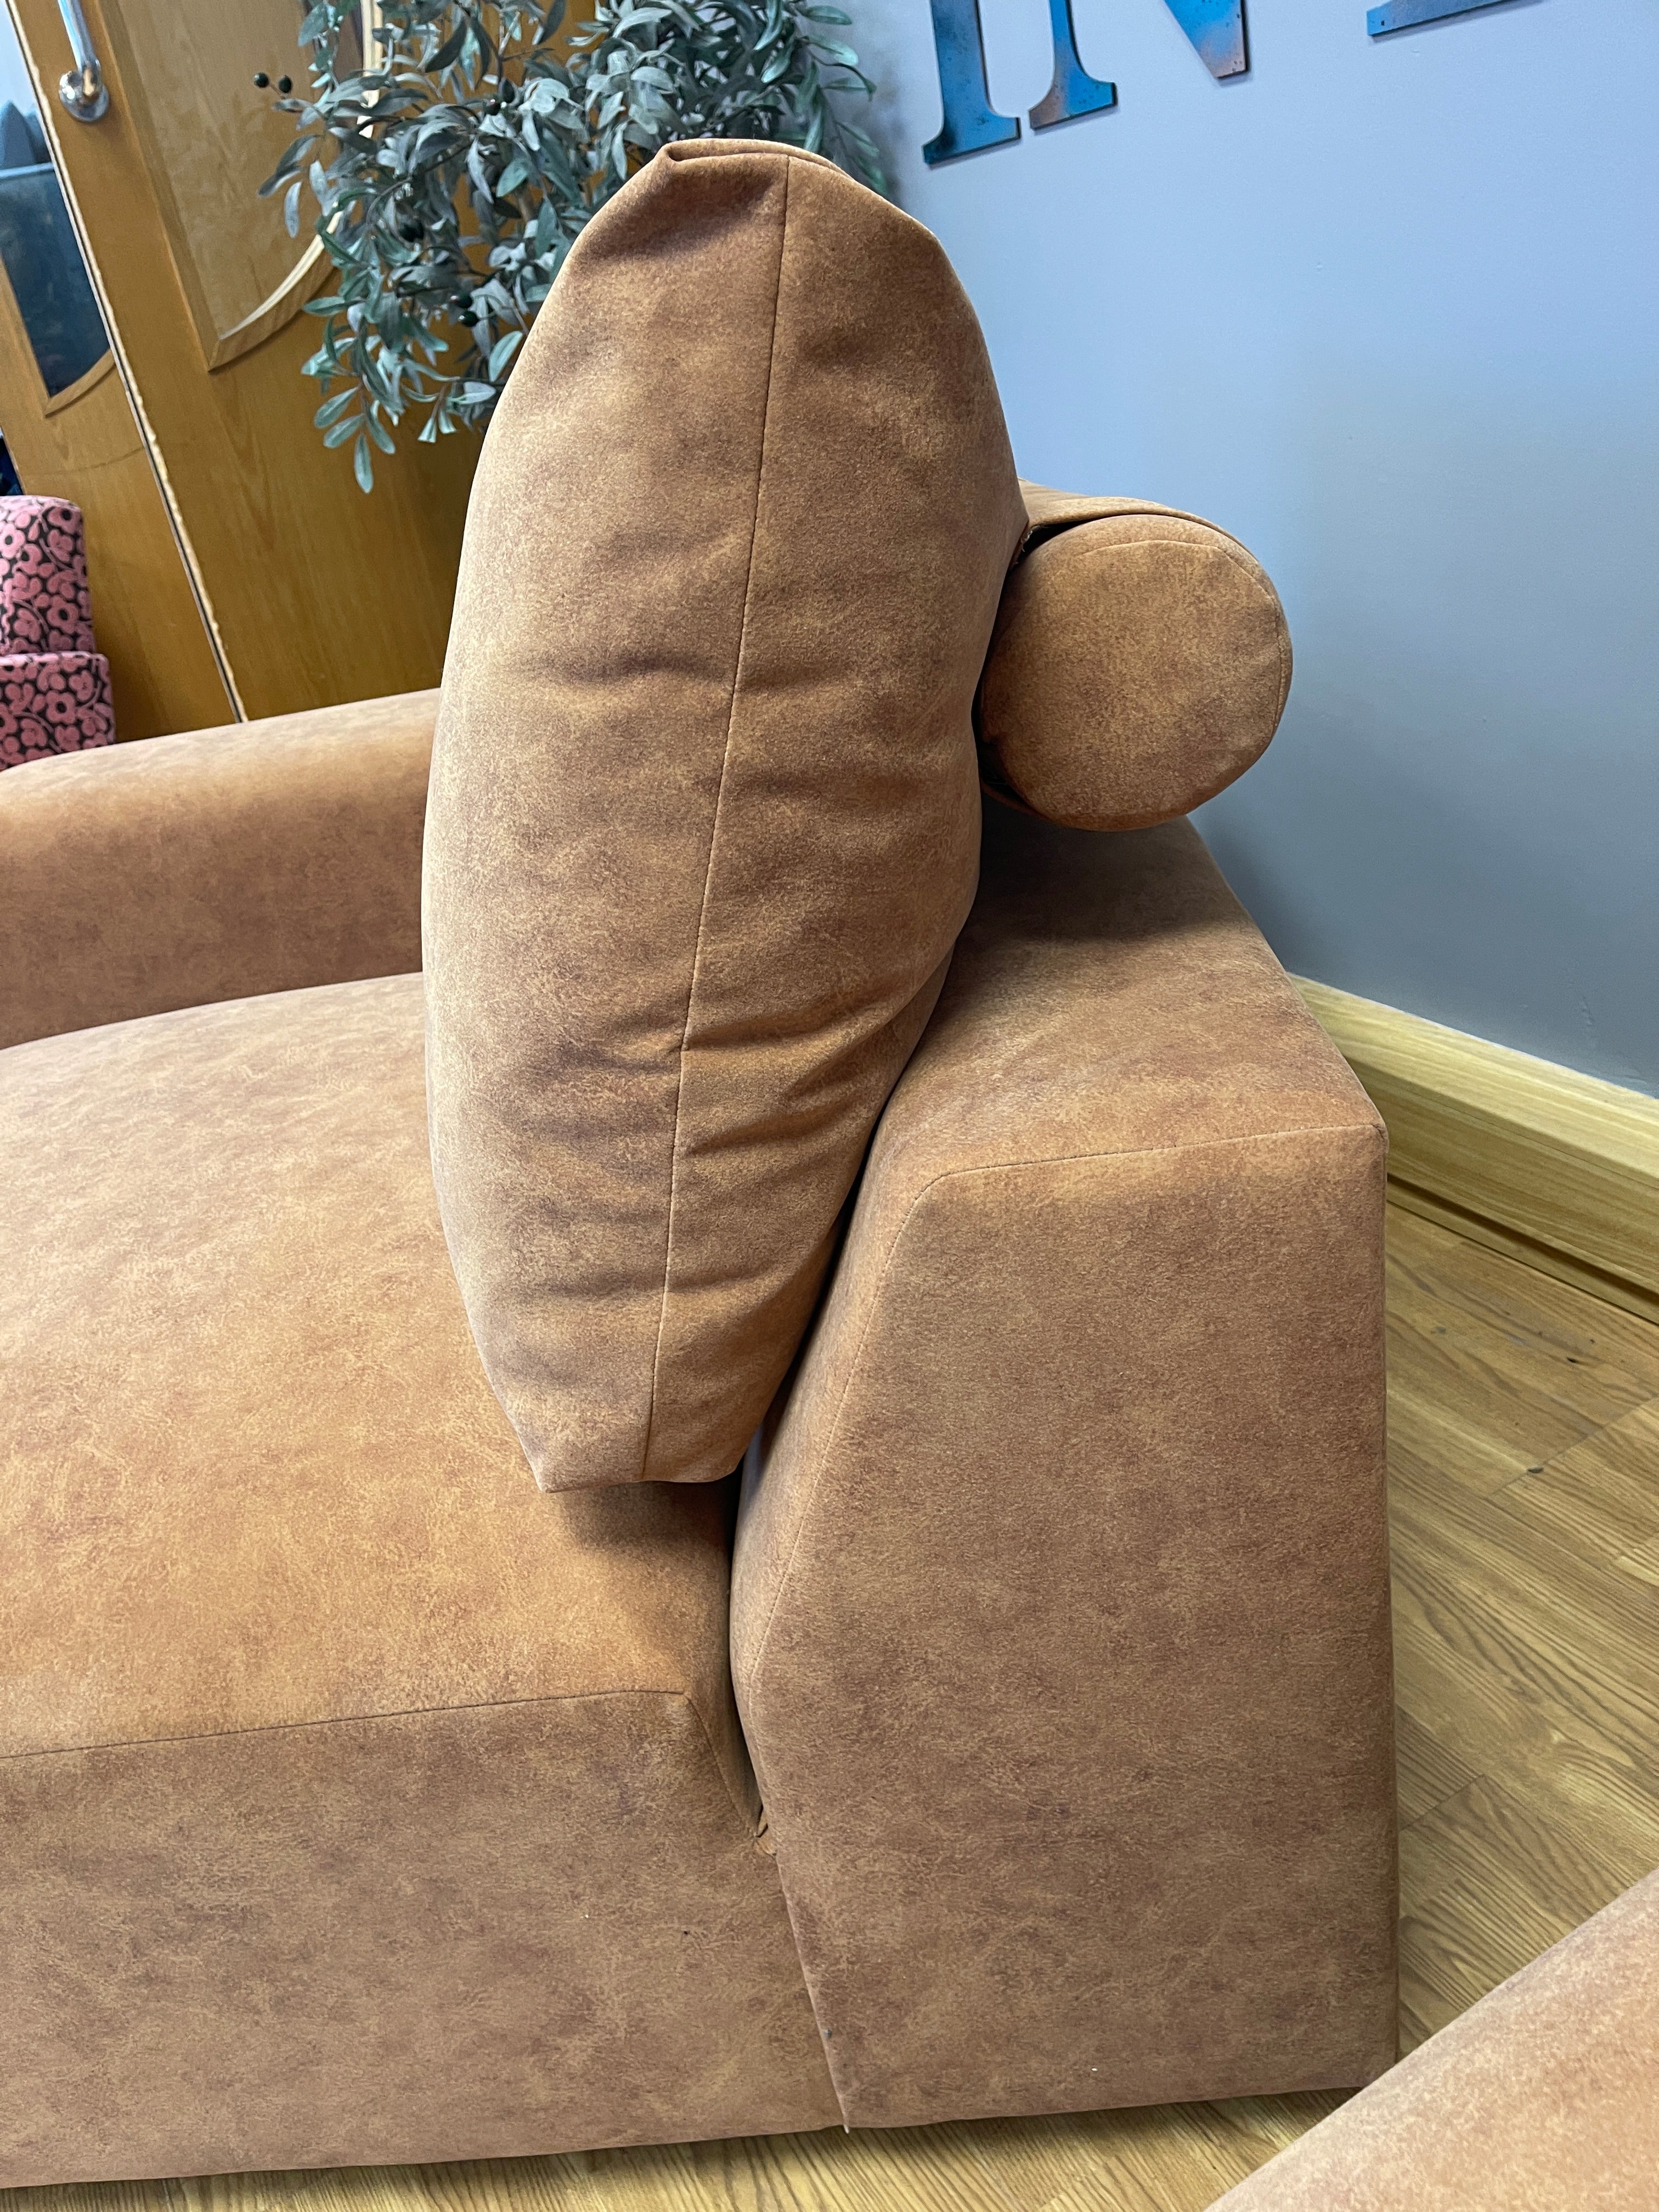 WHITE LABEL ROCCO split 4 seater sofa in tan faux suede / distressed velvet